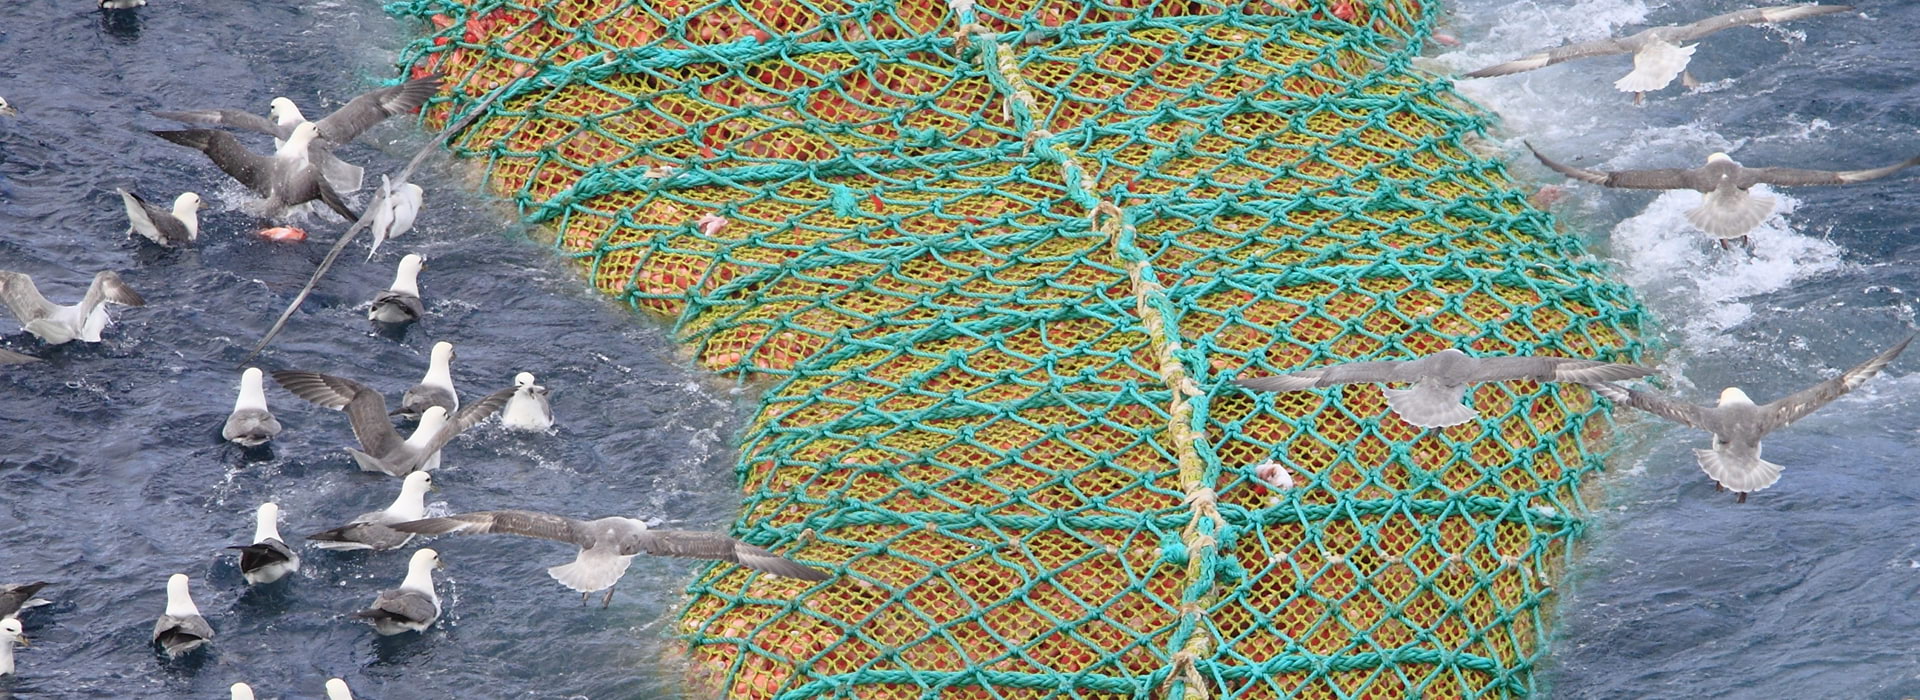 Trawler Fishing Net of Garware Technical Fibres 